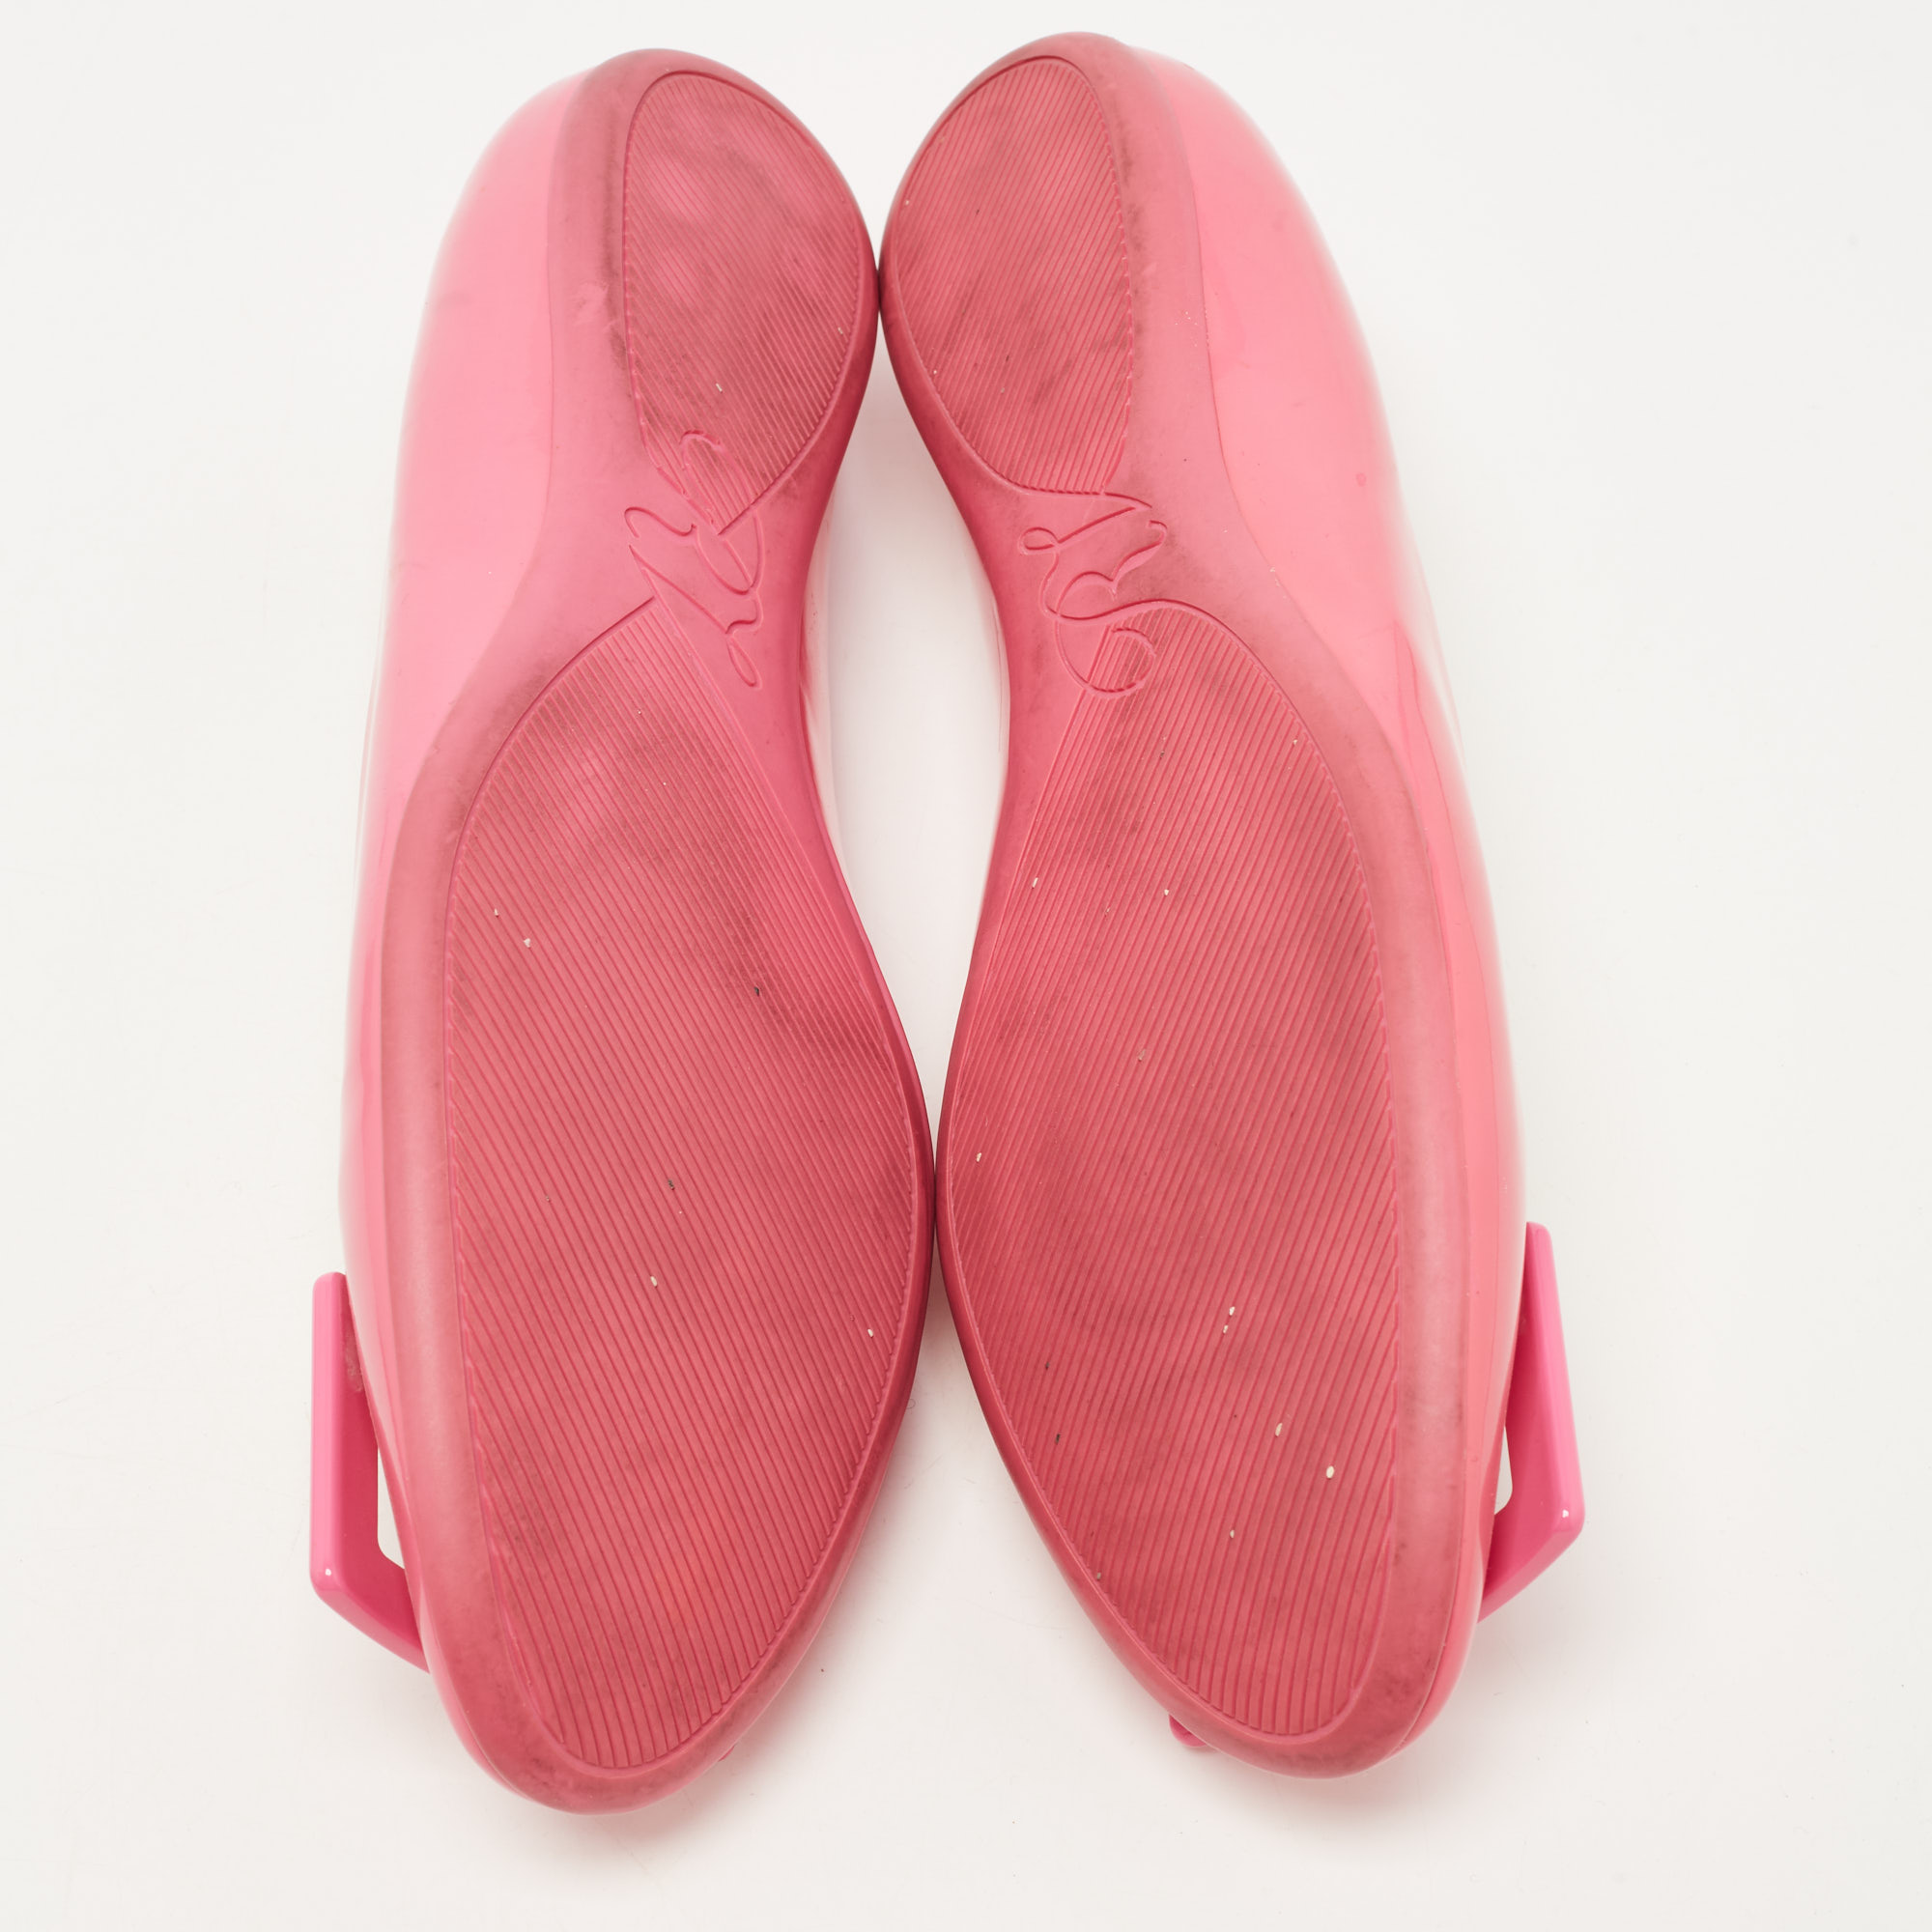 Roger Vivier Pink Patent Leather Gommette Ballet Flats Size 39.5